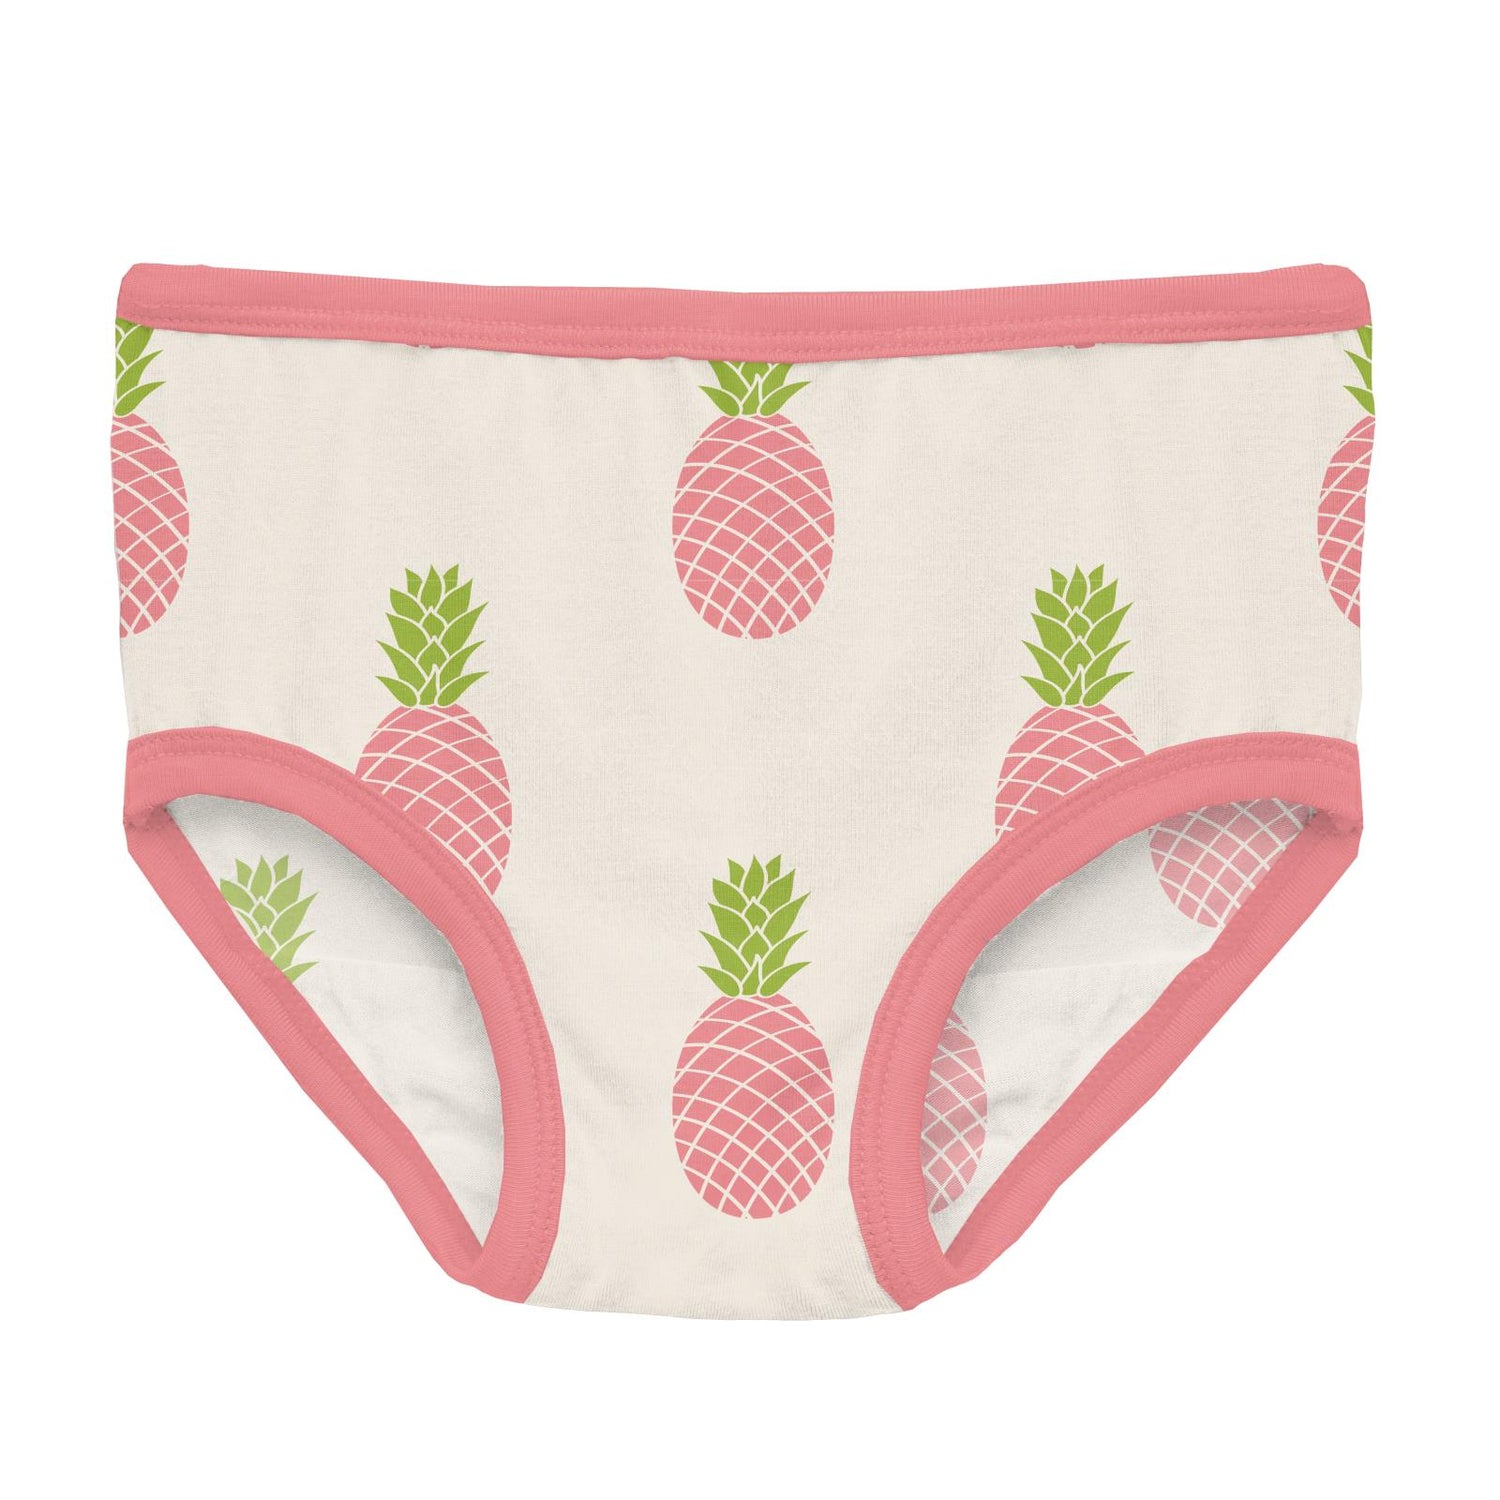 Print Girl's Underwear in Strawberry Pineapples